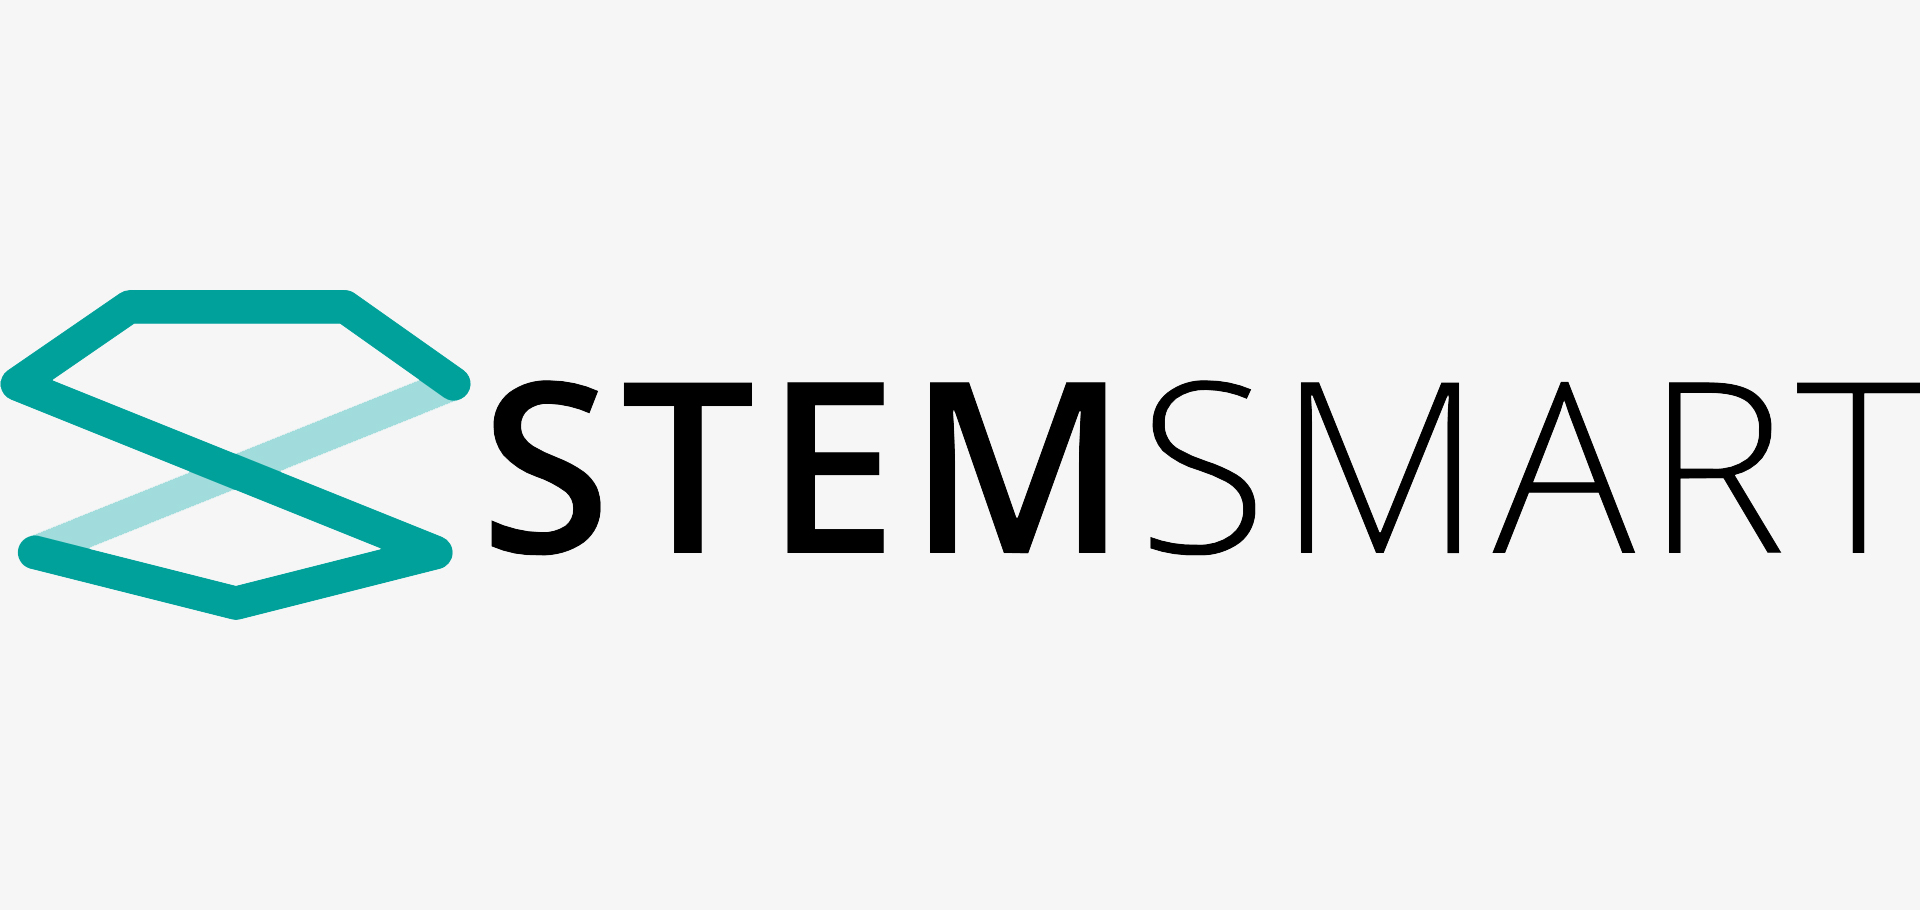 STEM SMART logo